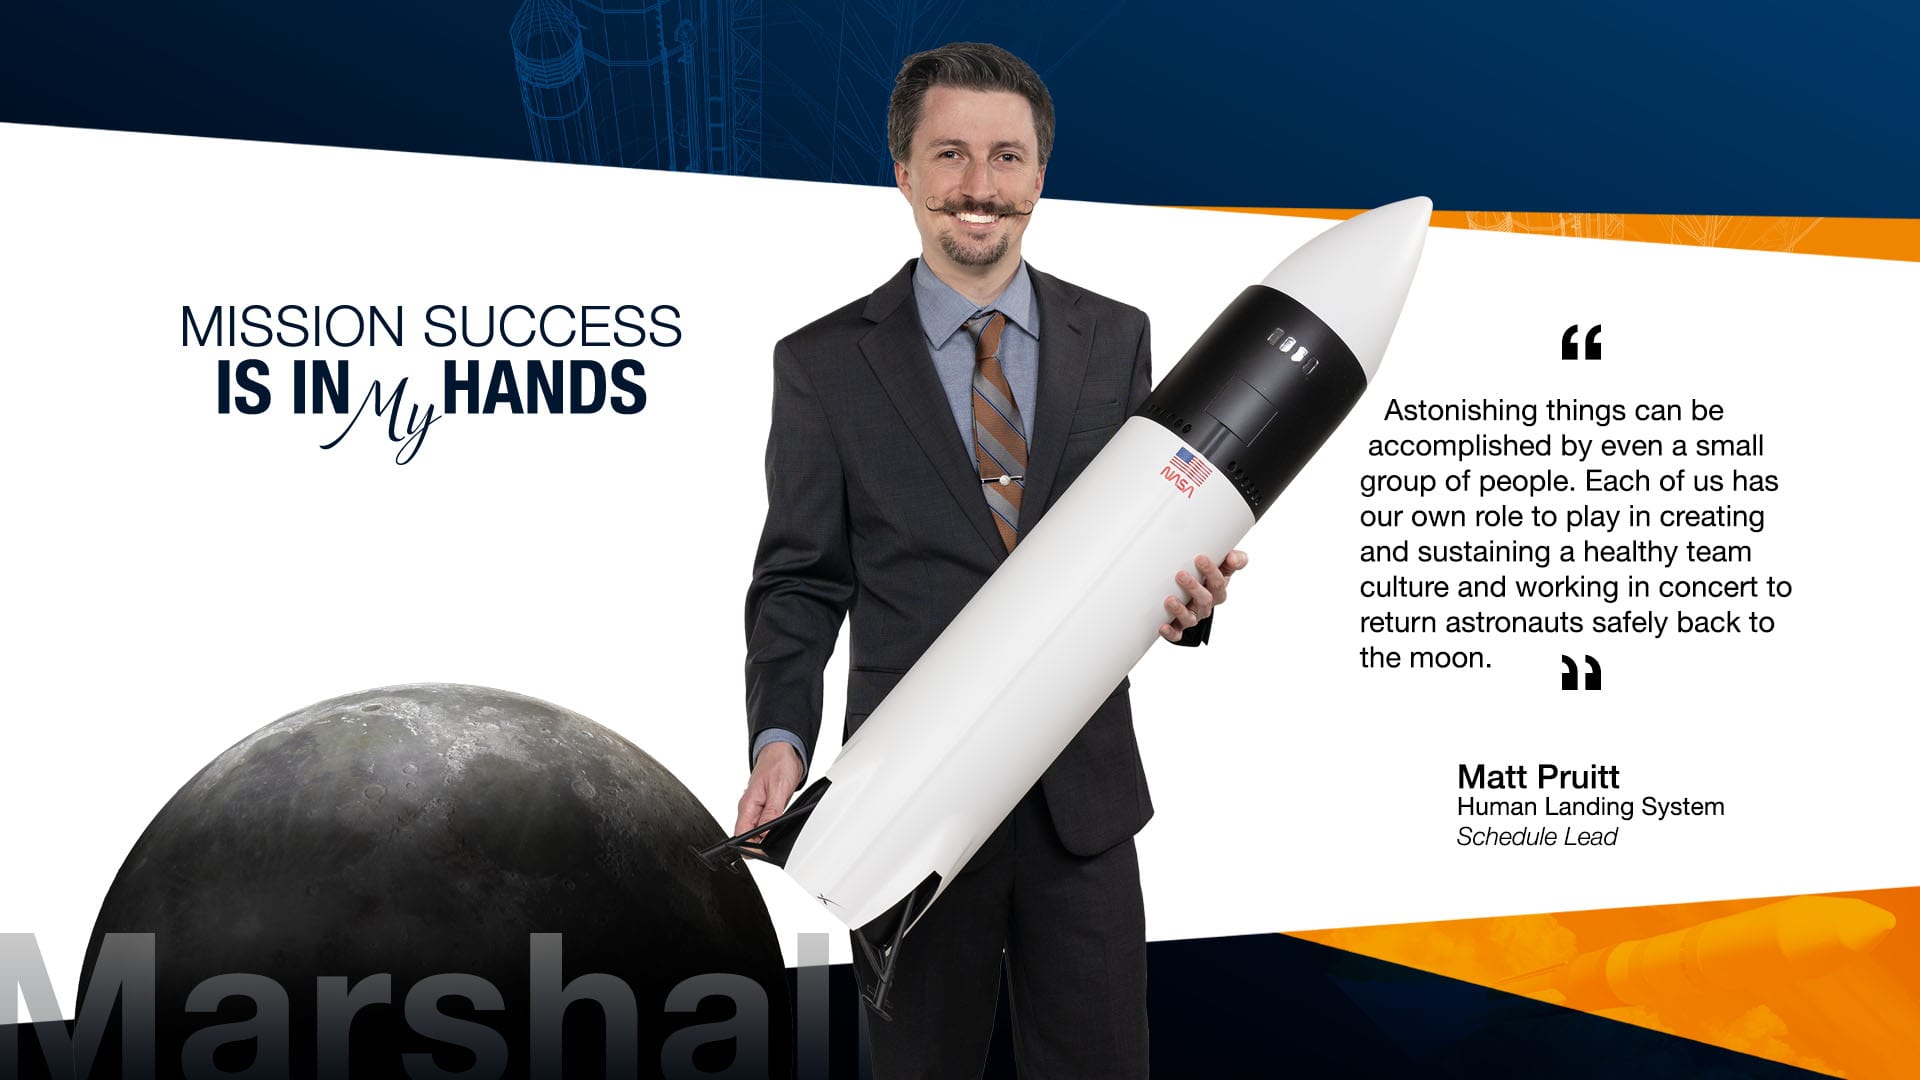 Matthew Pruitt is the schedule functional lead for NASA’s Human Landing System Program.